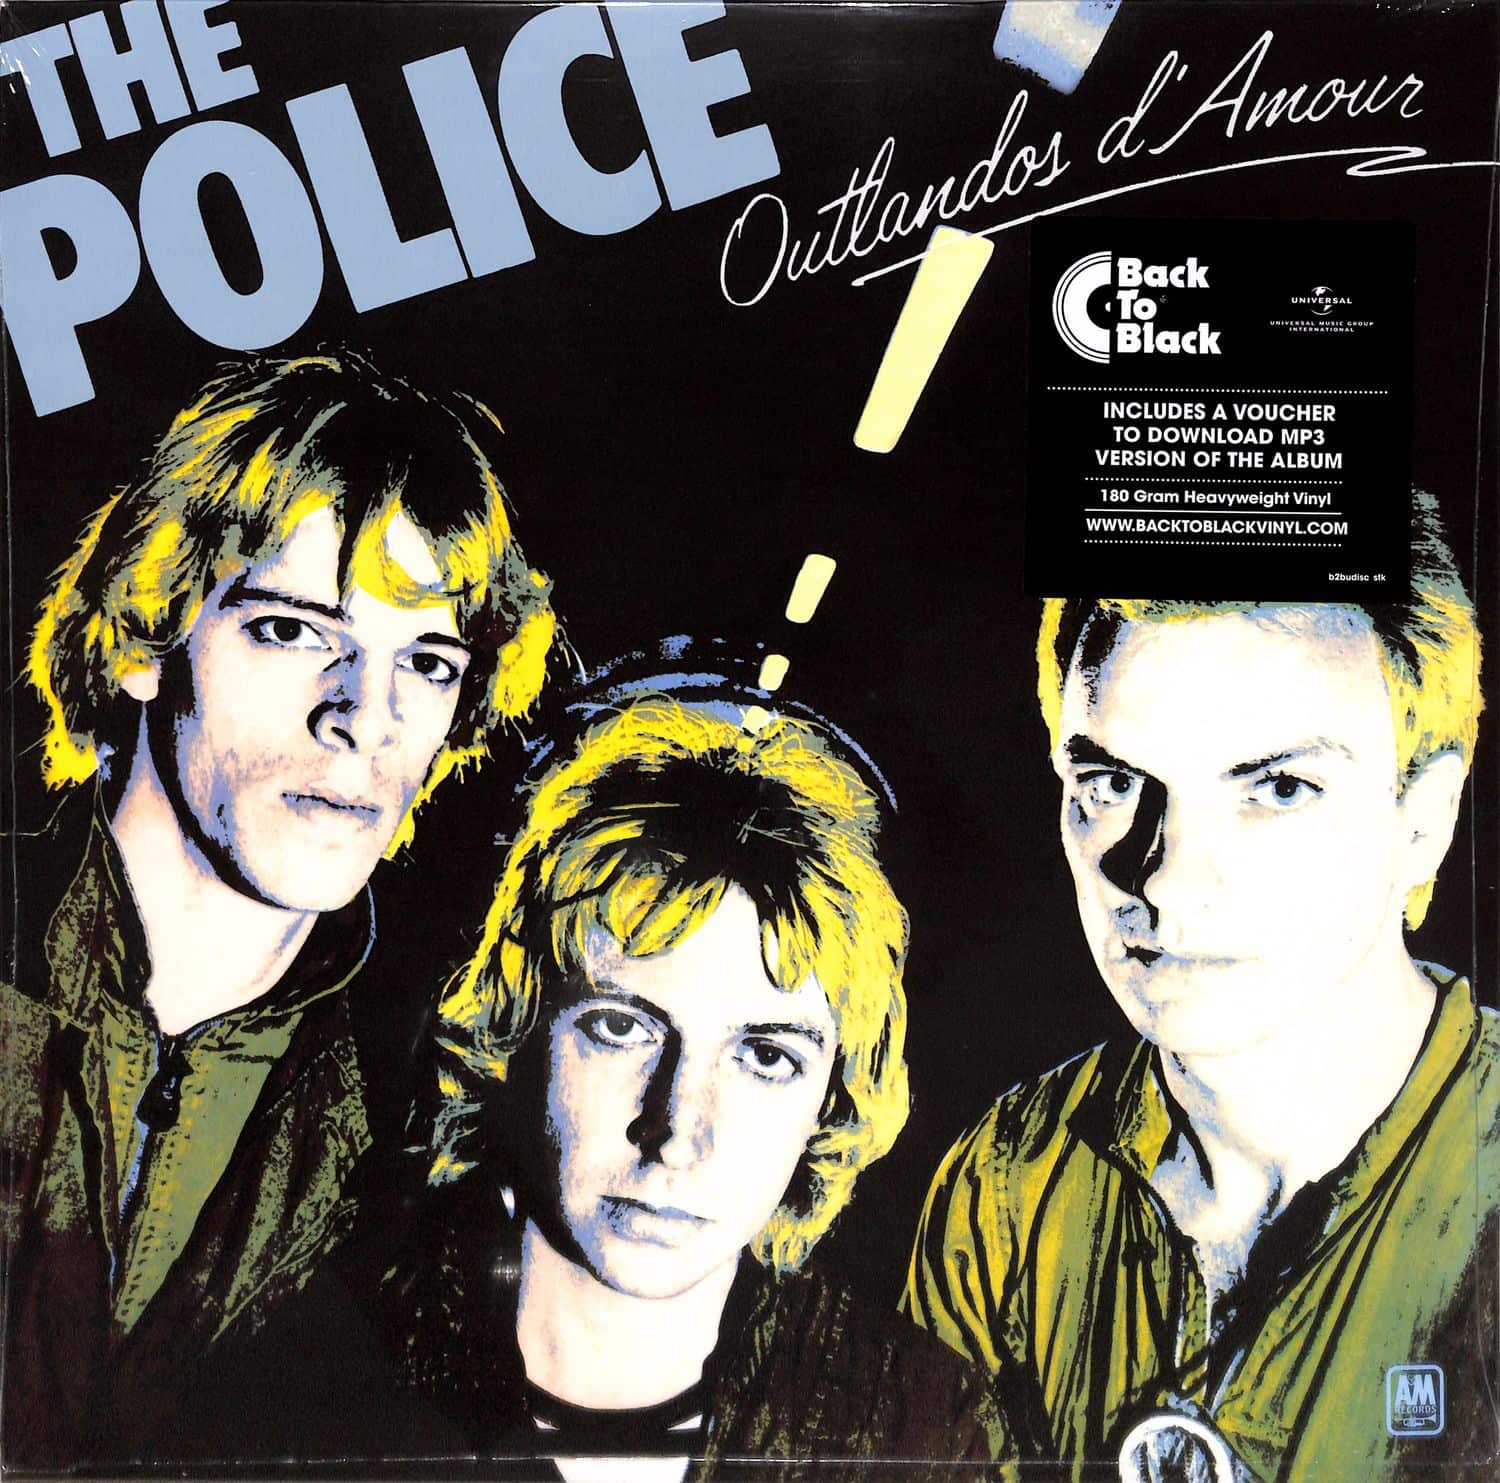 The Police - OUTLANDOS D AMOUR 